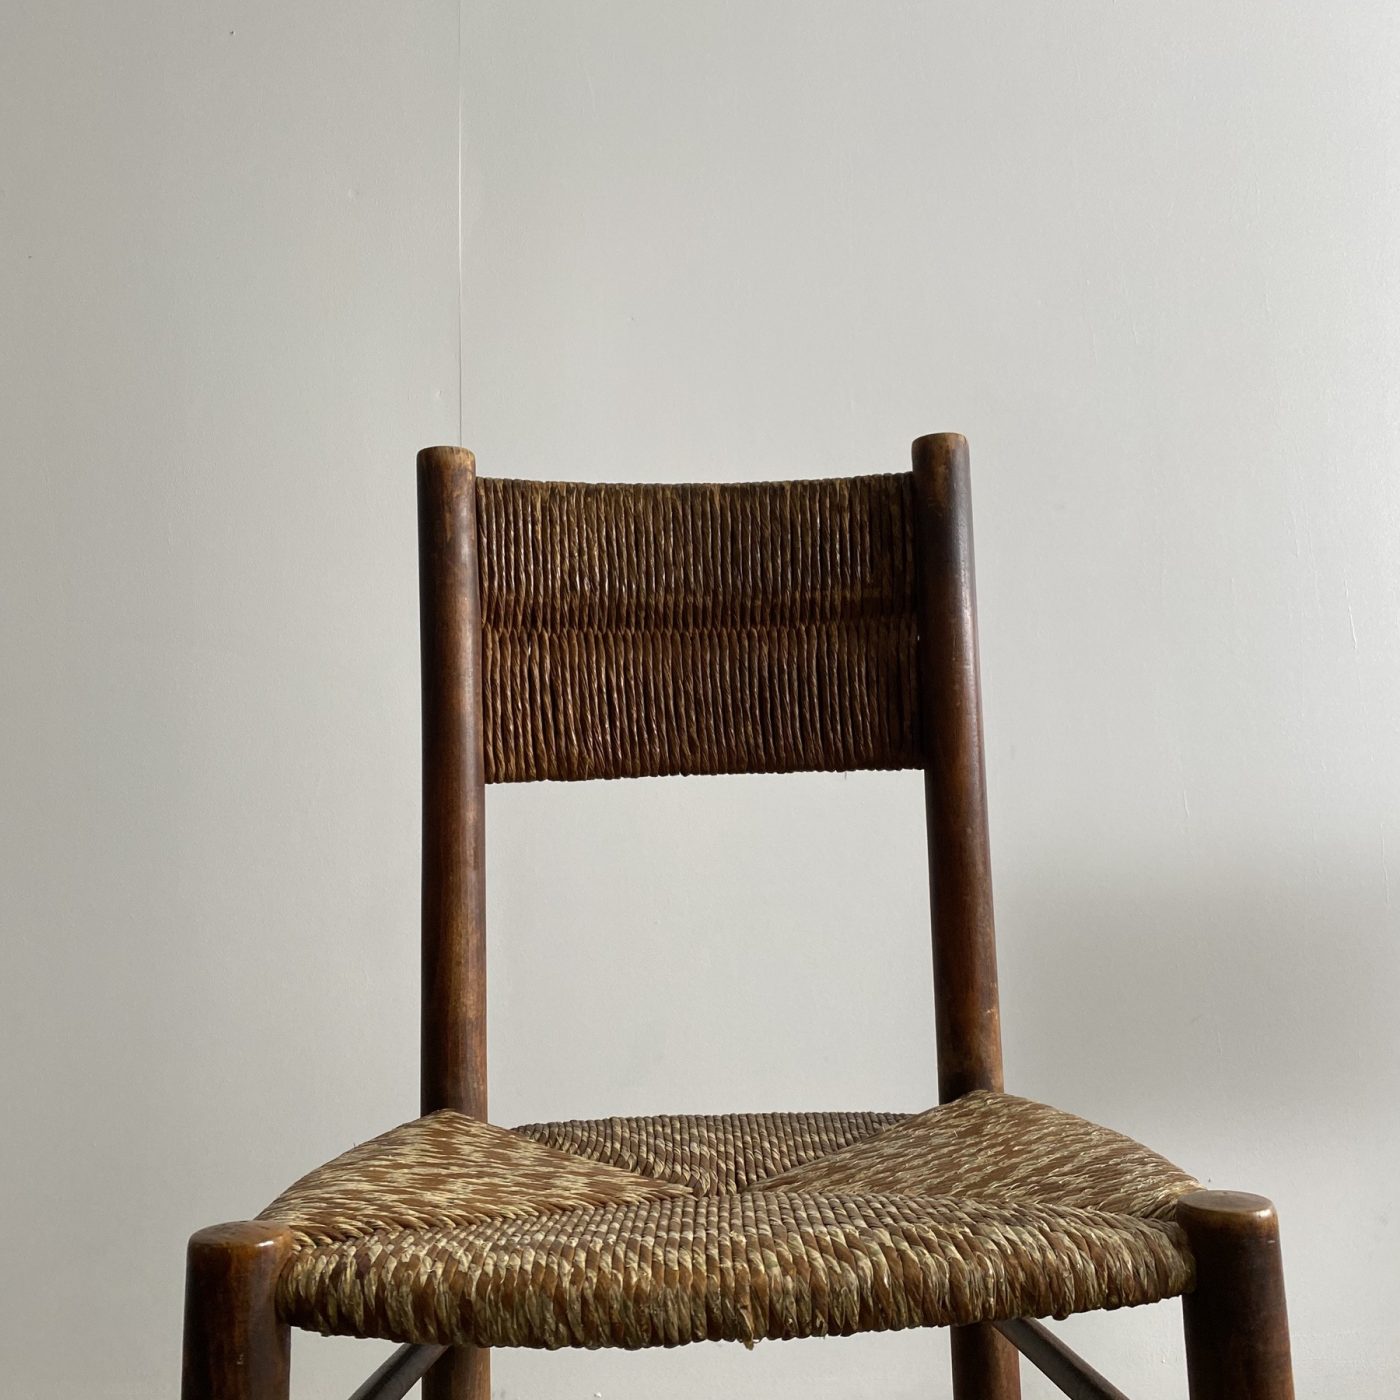 objet-vagabond-rustic-chairs0004